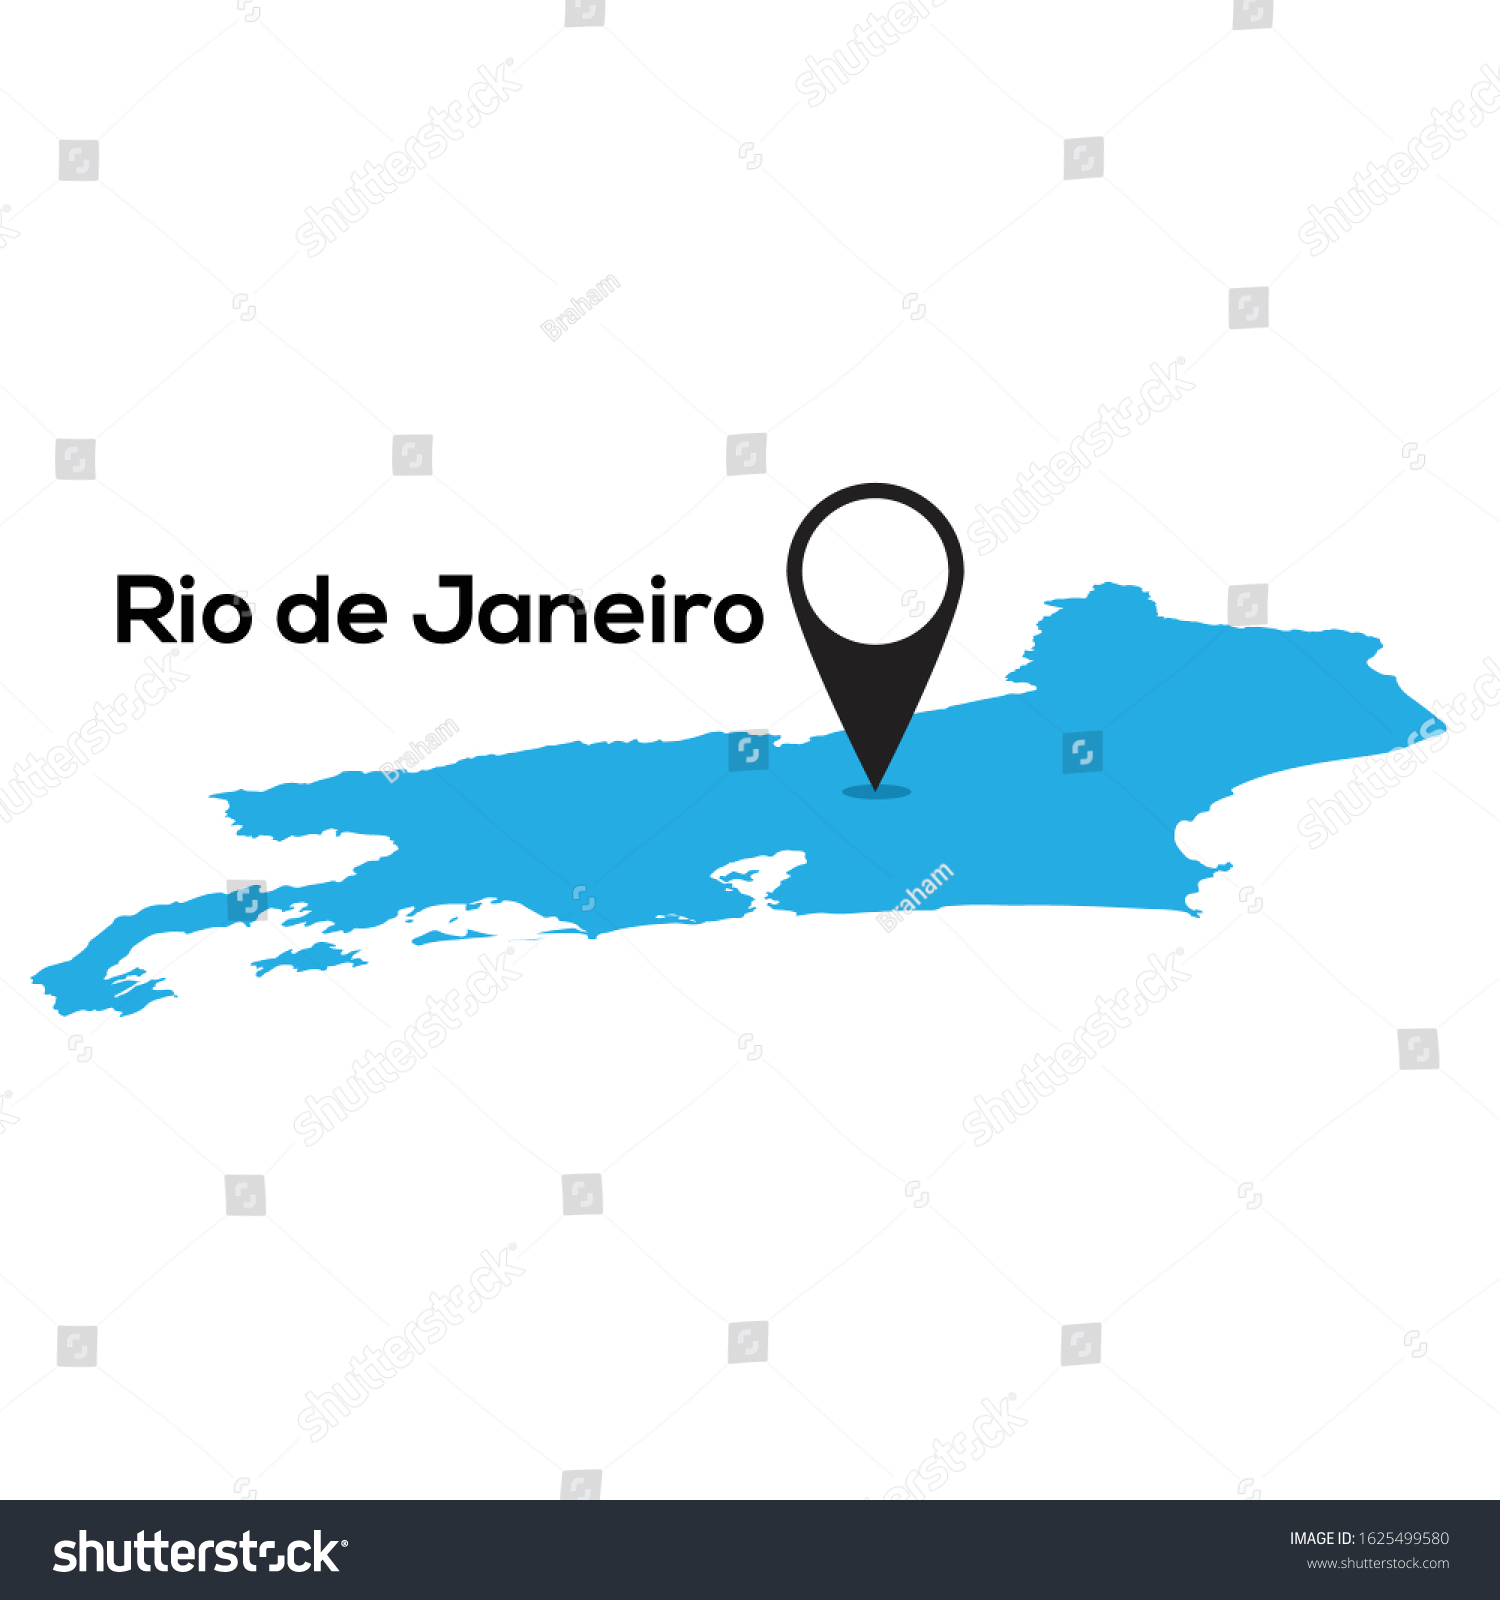 Rio De Janeiro City 3d Map Location Perfect To Royalty Free Stock Vector 1625499580 7706